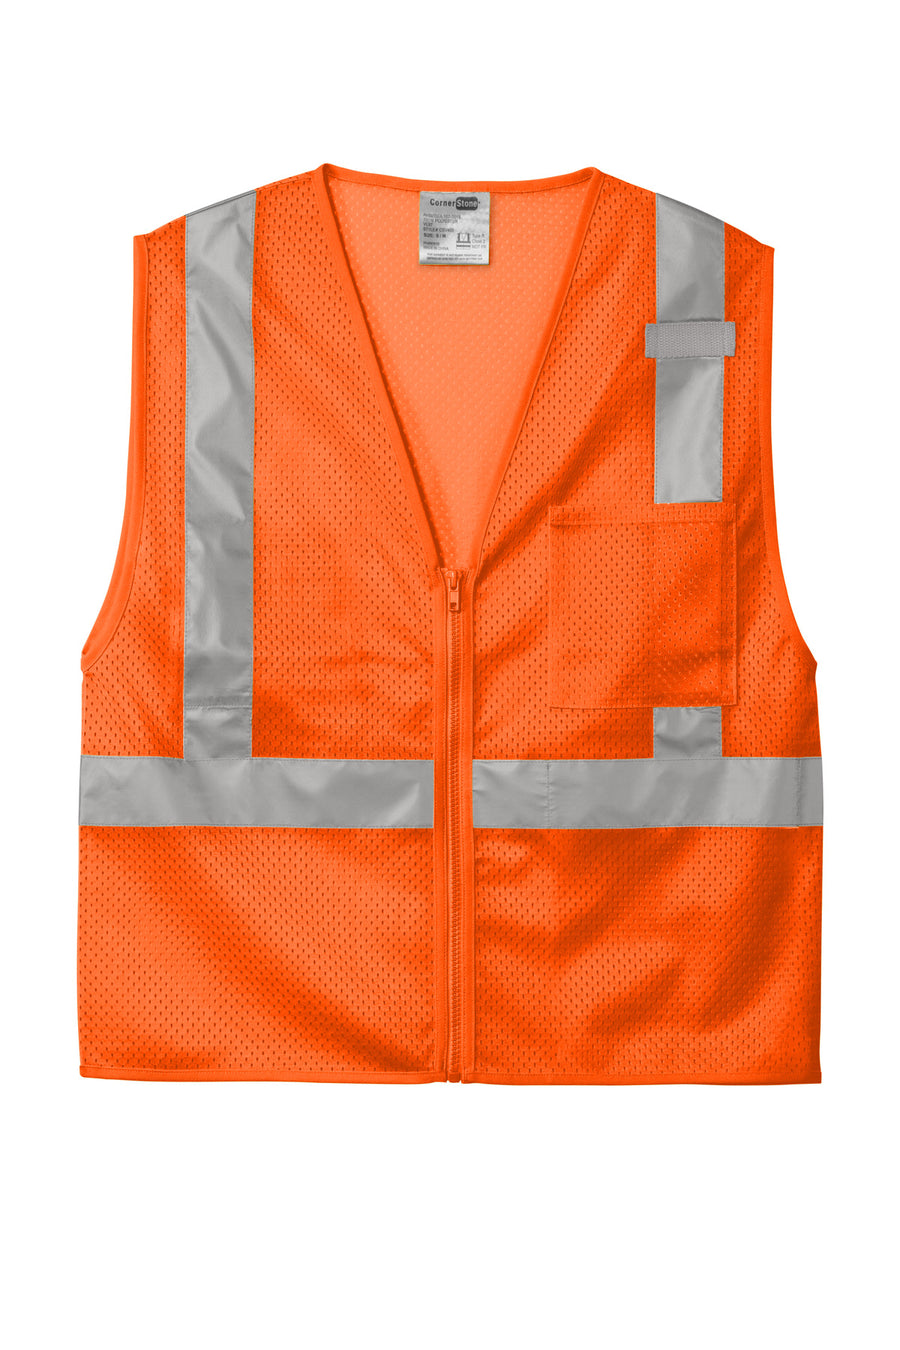 CSV102-Safety Orange-front_flat